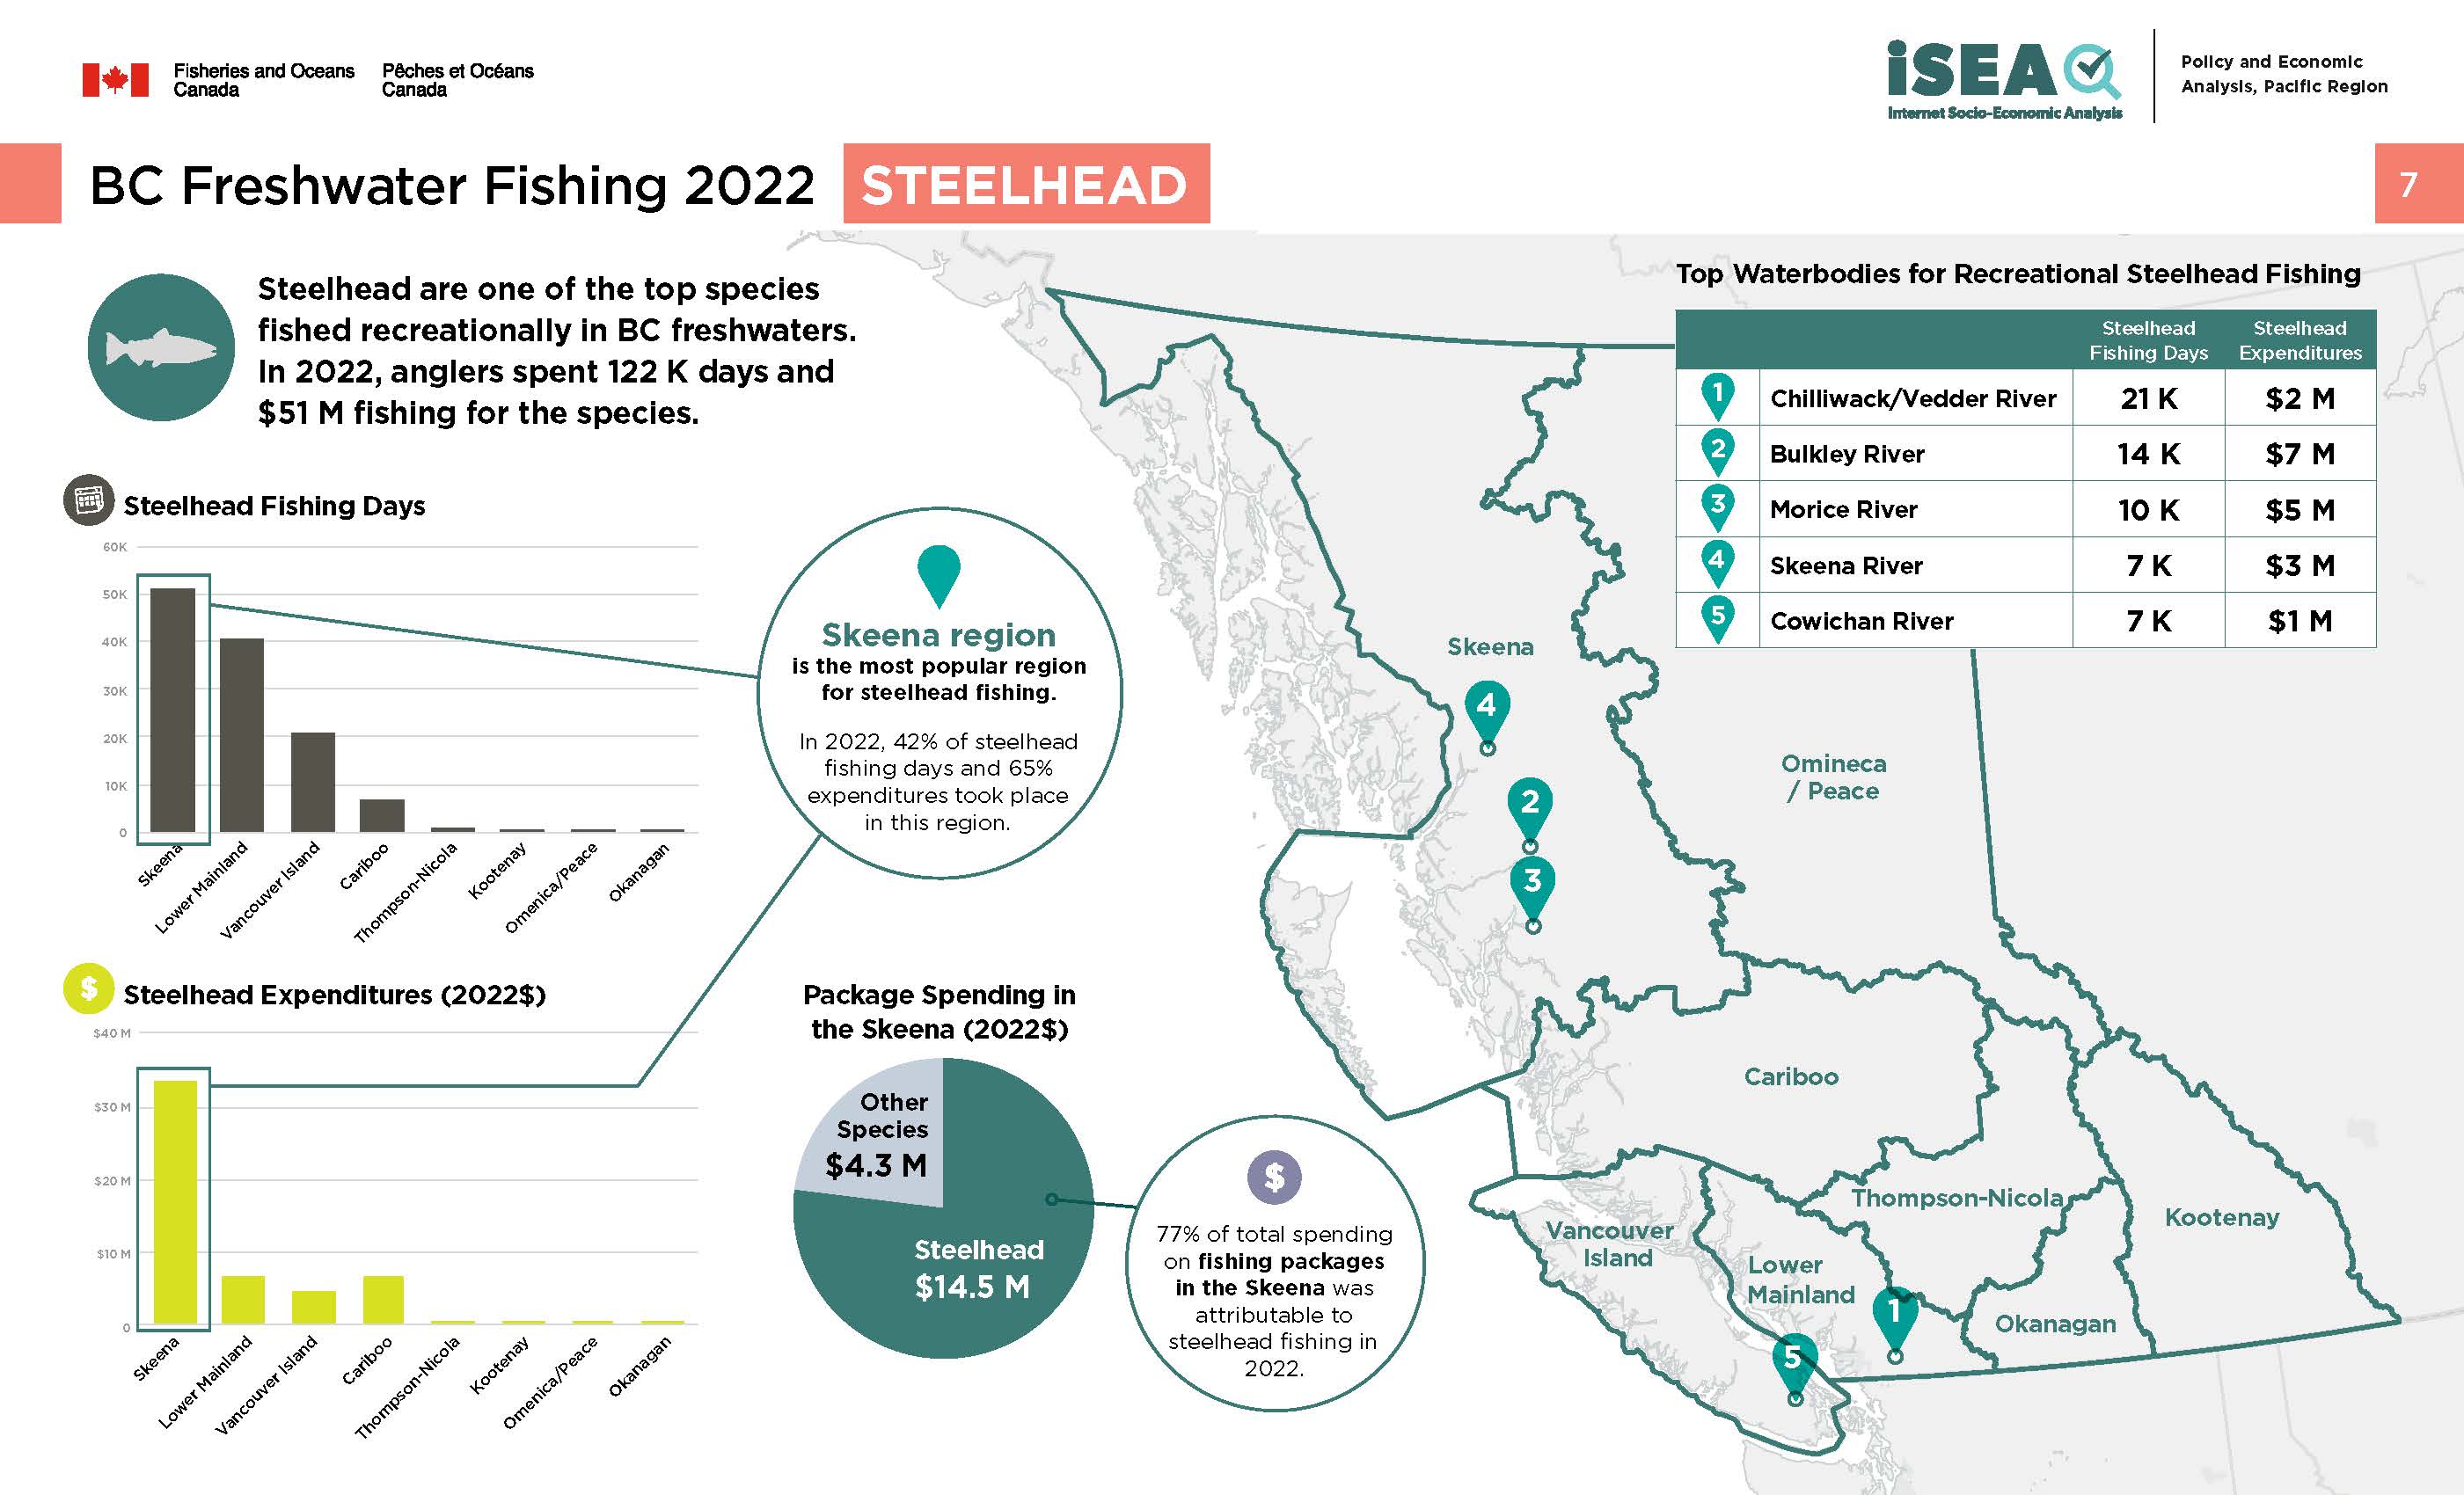 Photo: infographic of BC freshwater fishing 2022, steelhead